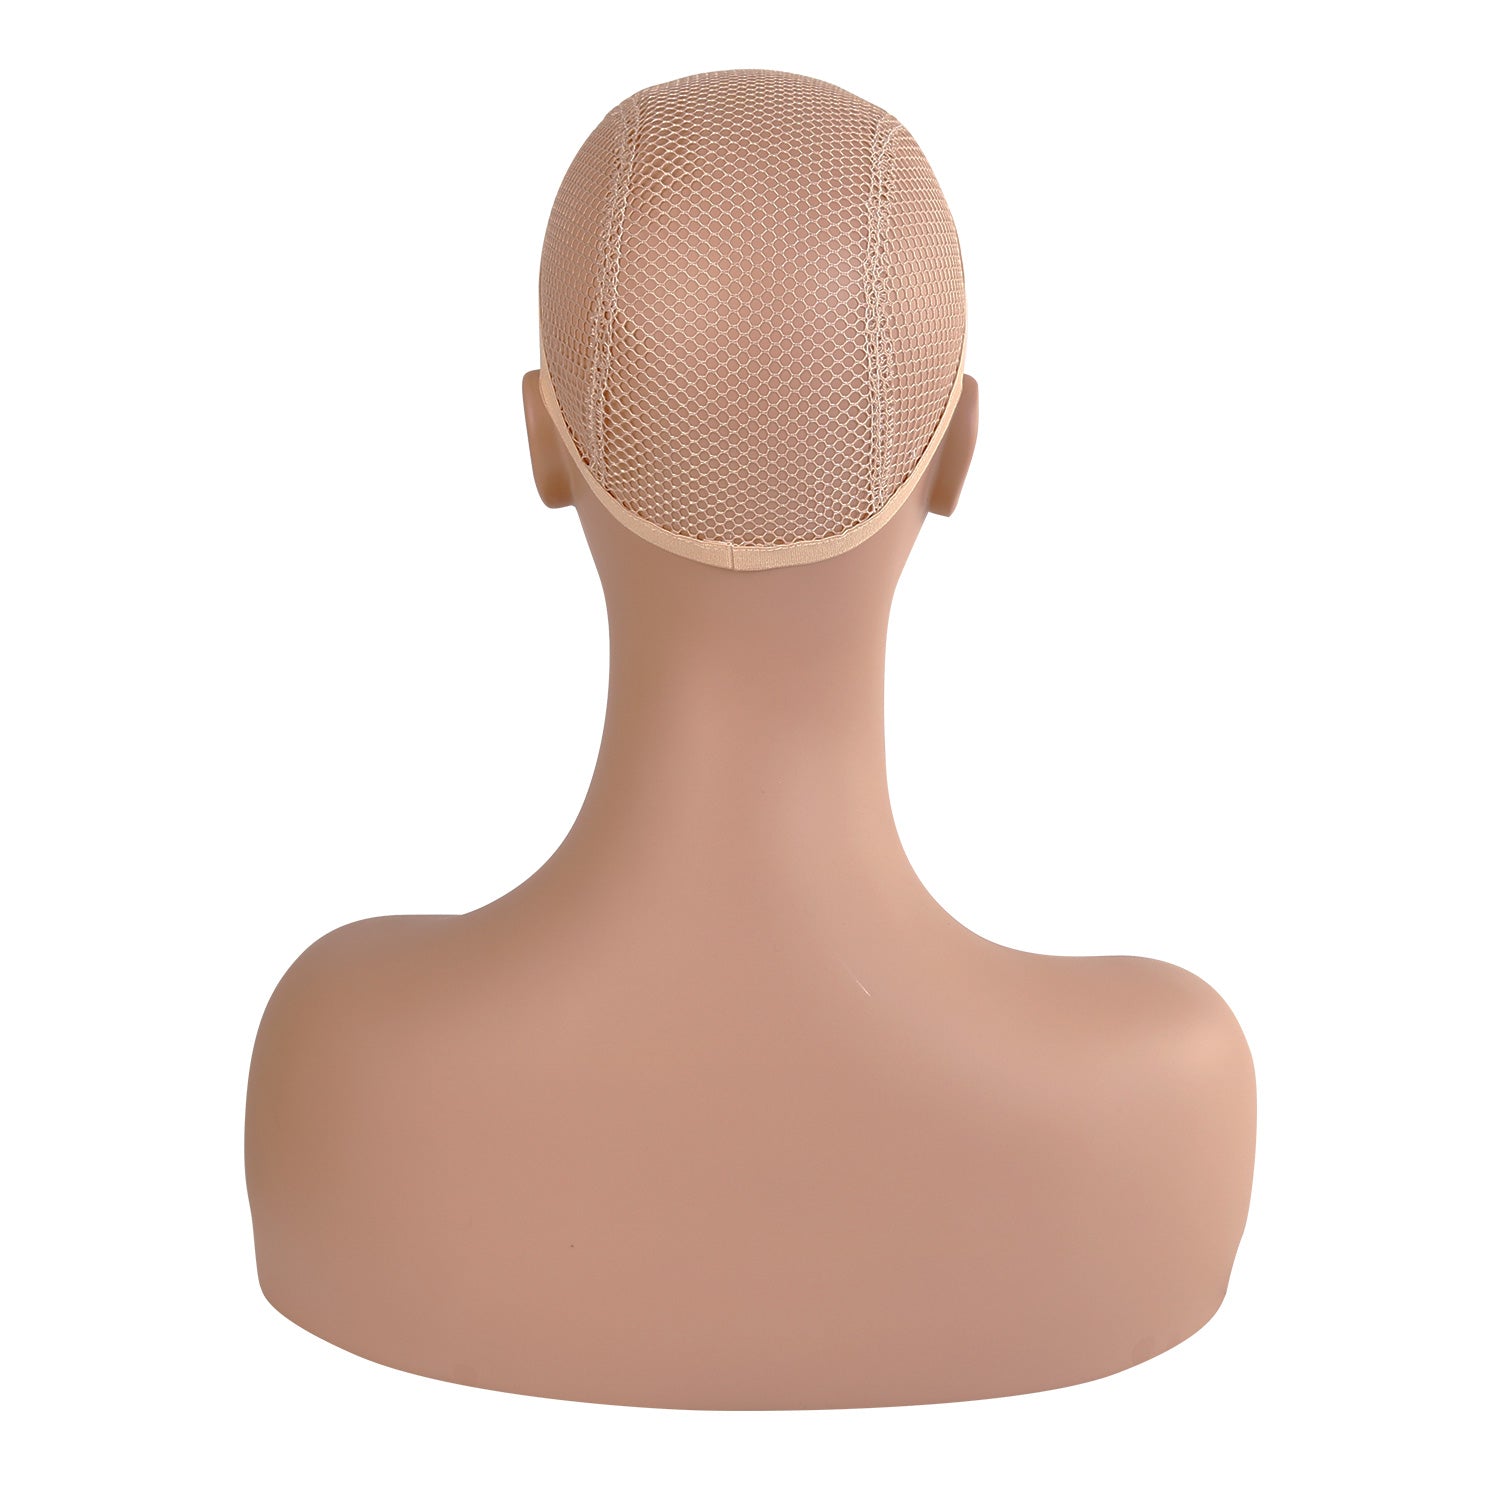 Studio Limited 16'' Realistic Upper Body Mannequin Head